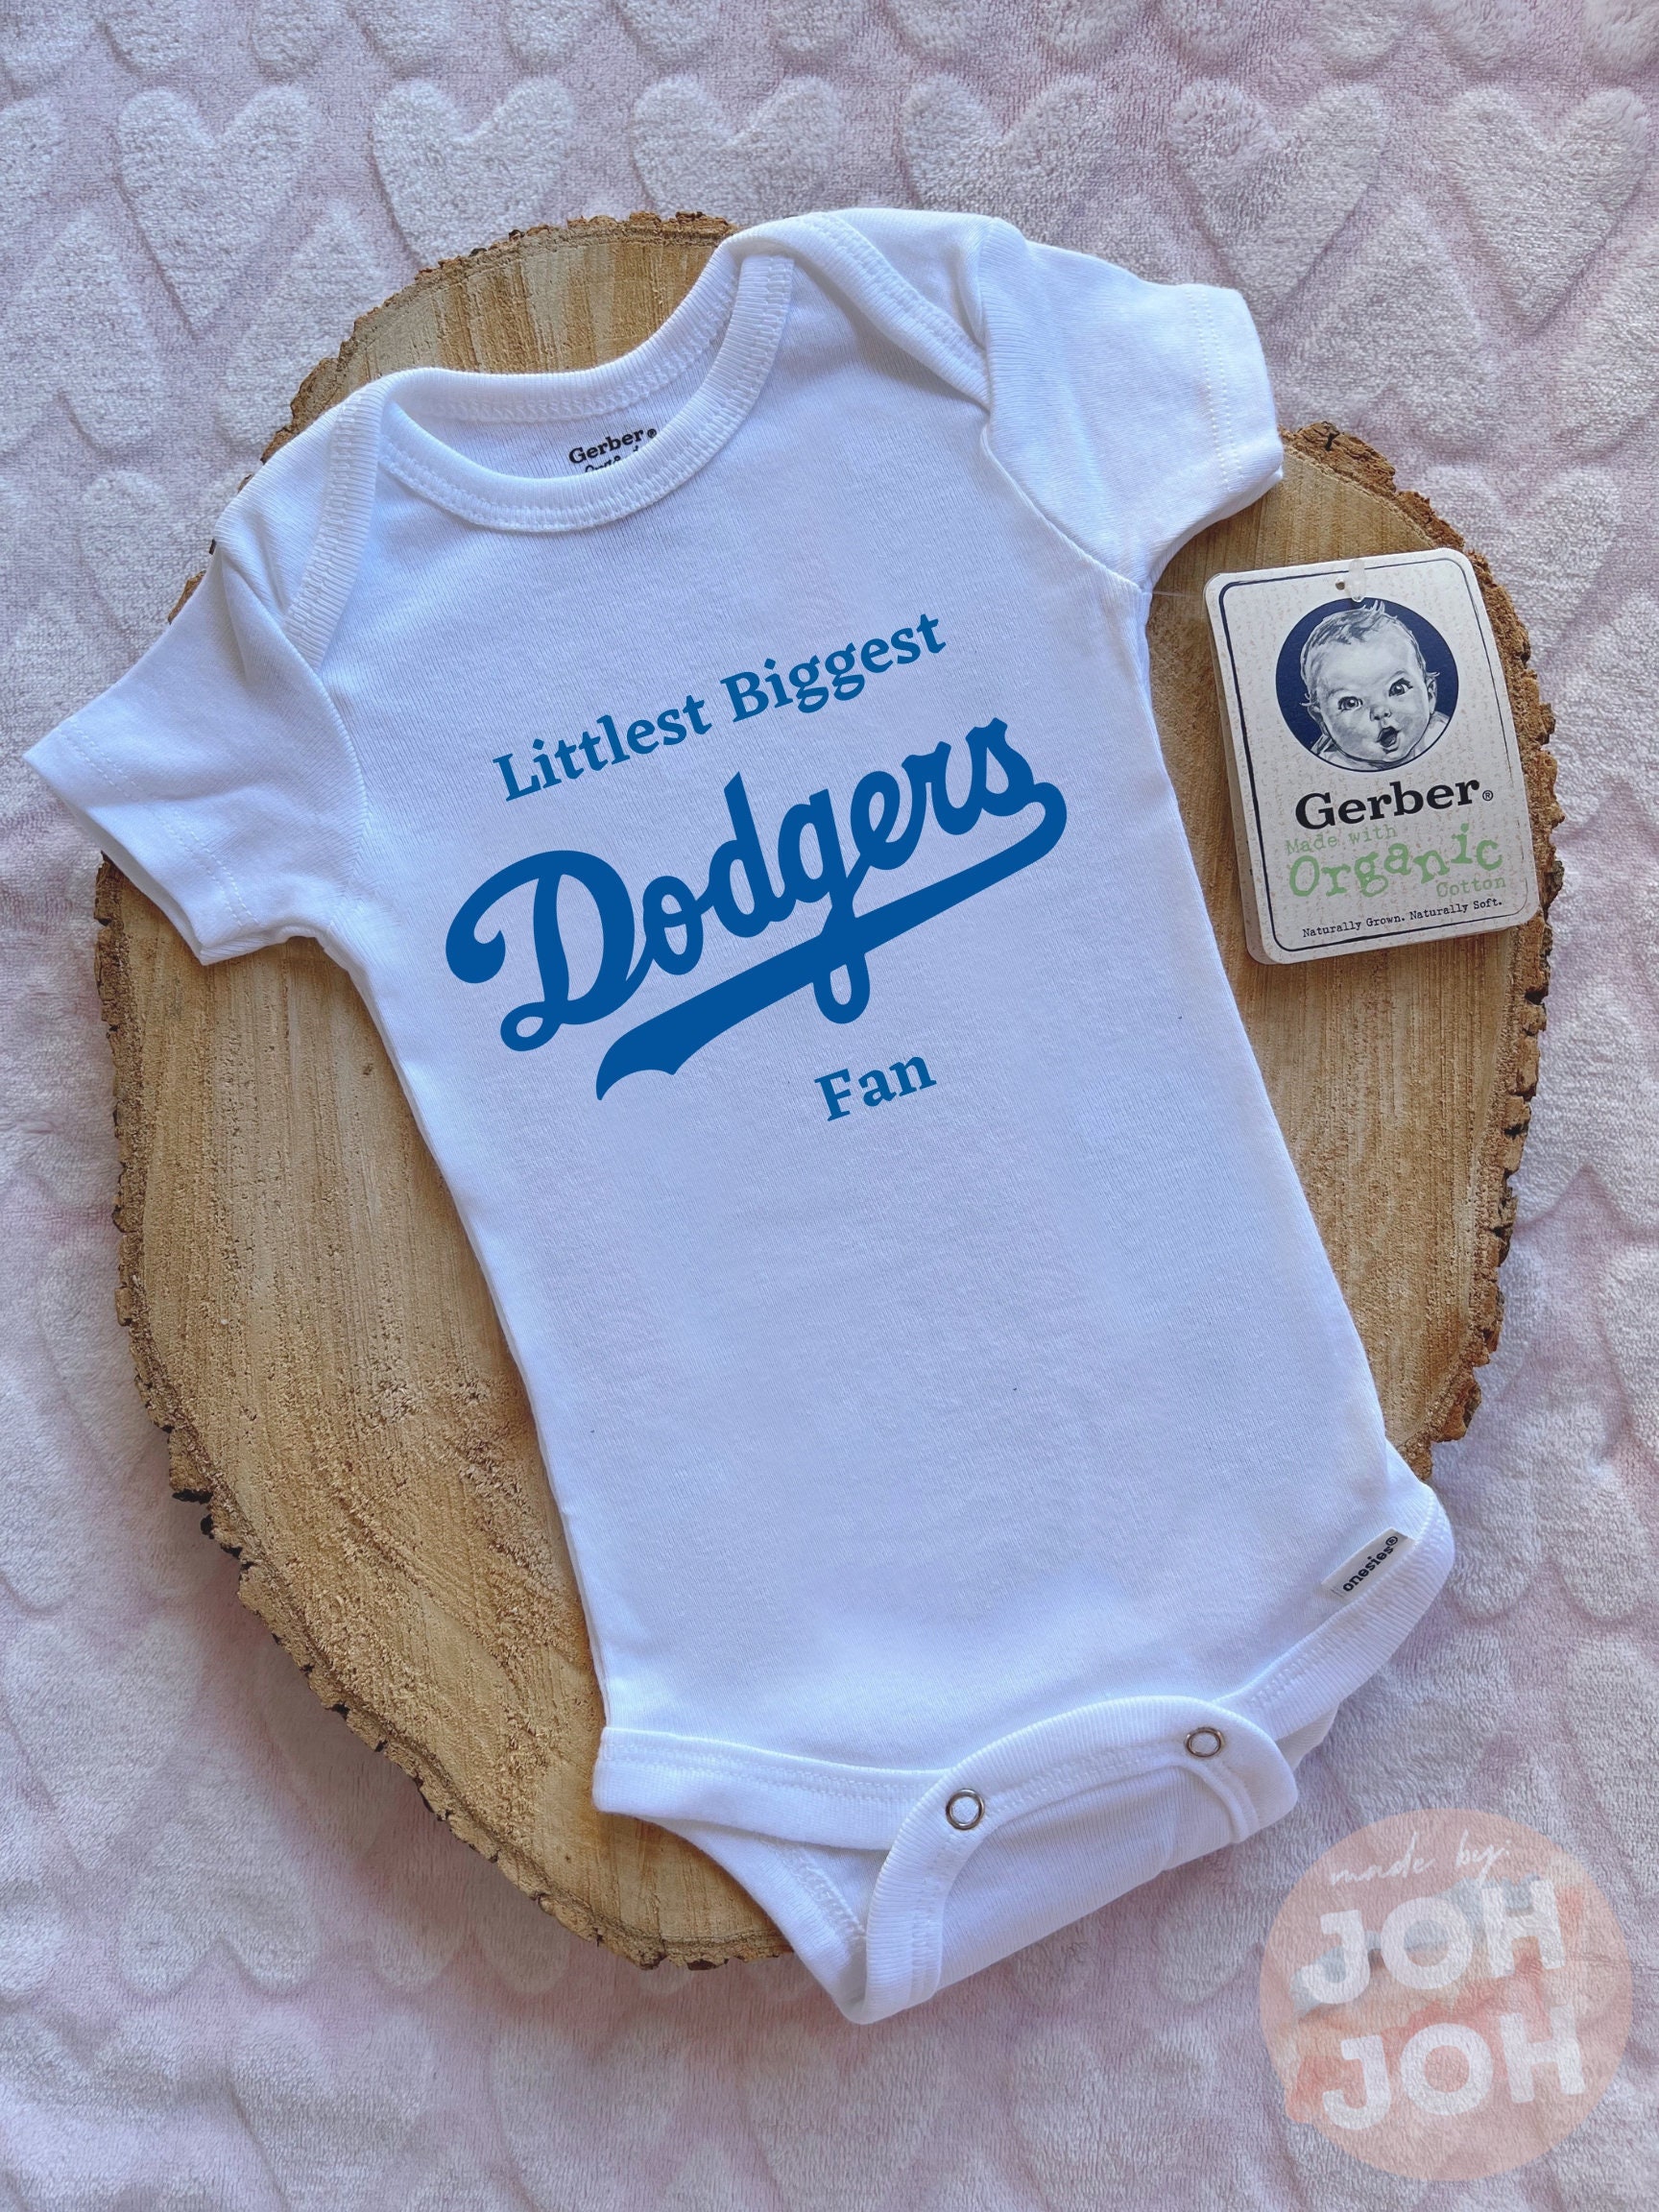 Dodgers Pregnancy 